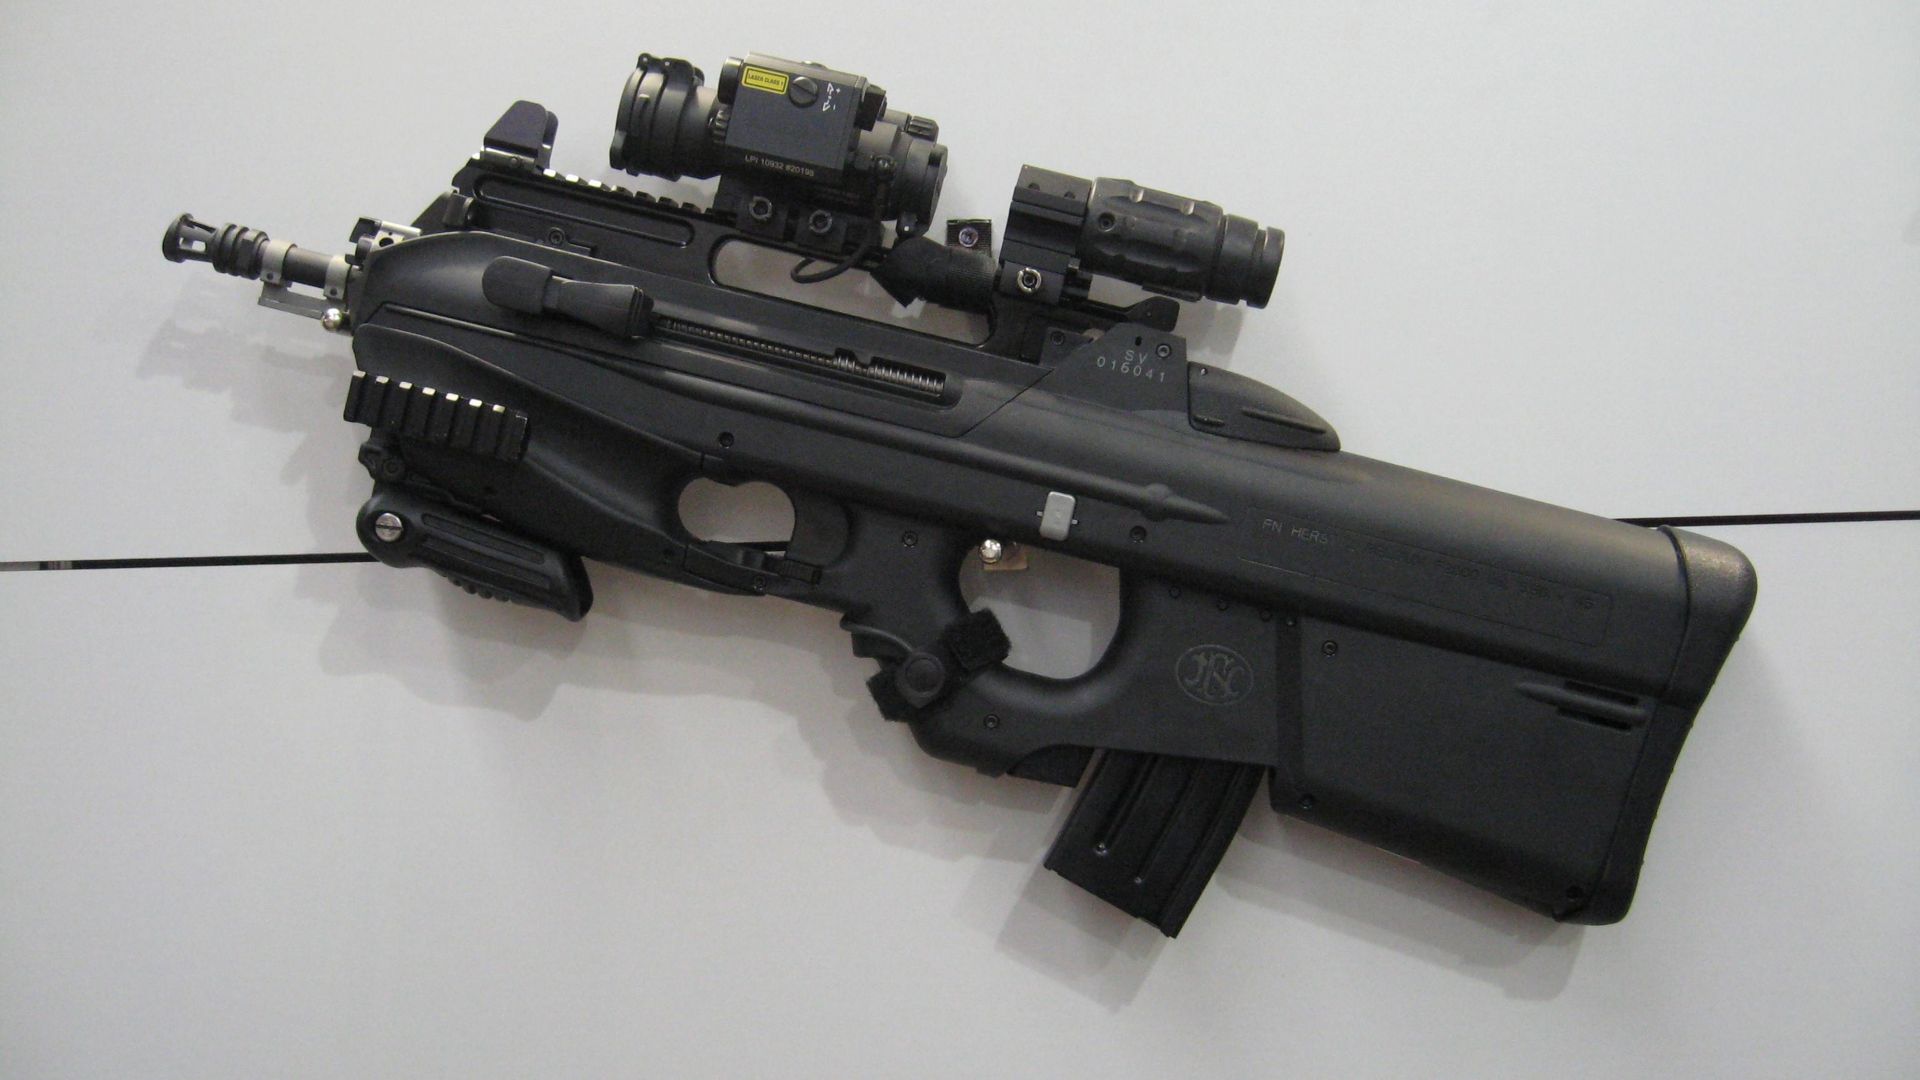 ФН Ф2000, Нато, штурмовая винтовка, FN F2000, 5.56×45mm, NATO, assault rifle,  (horizontal)